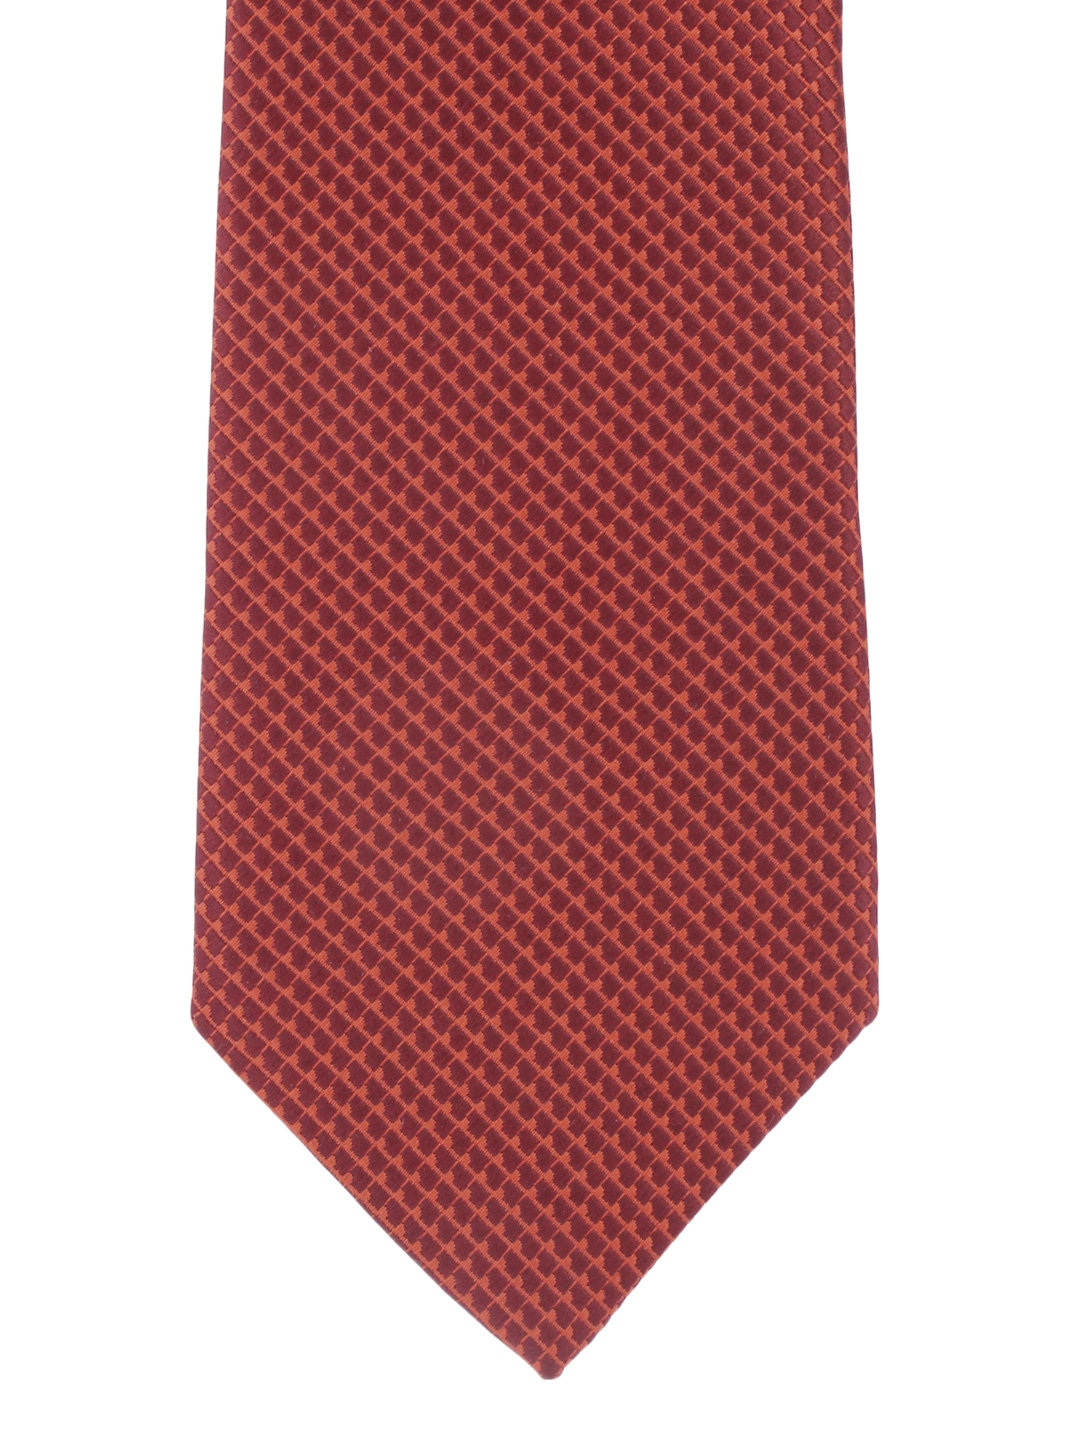 Buy Alvaro Castagnino Red Tie - Ties for Men 1384244 | Myntra